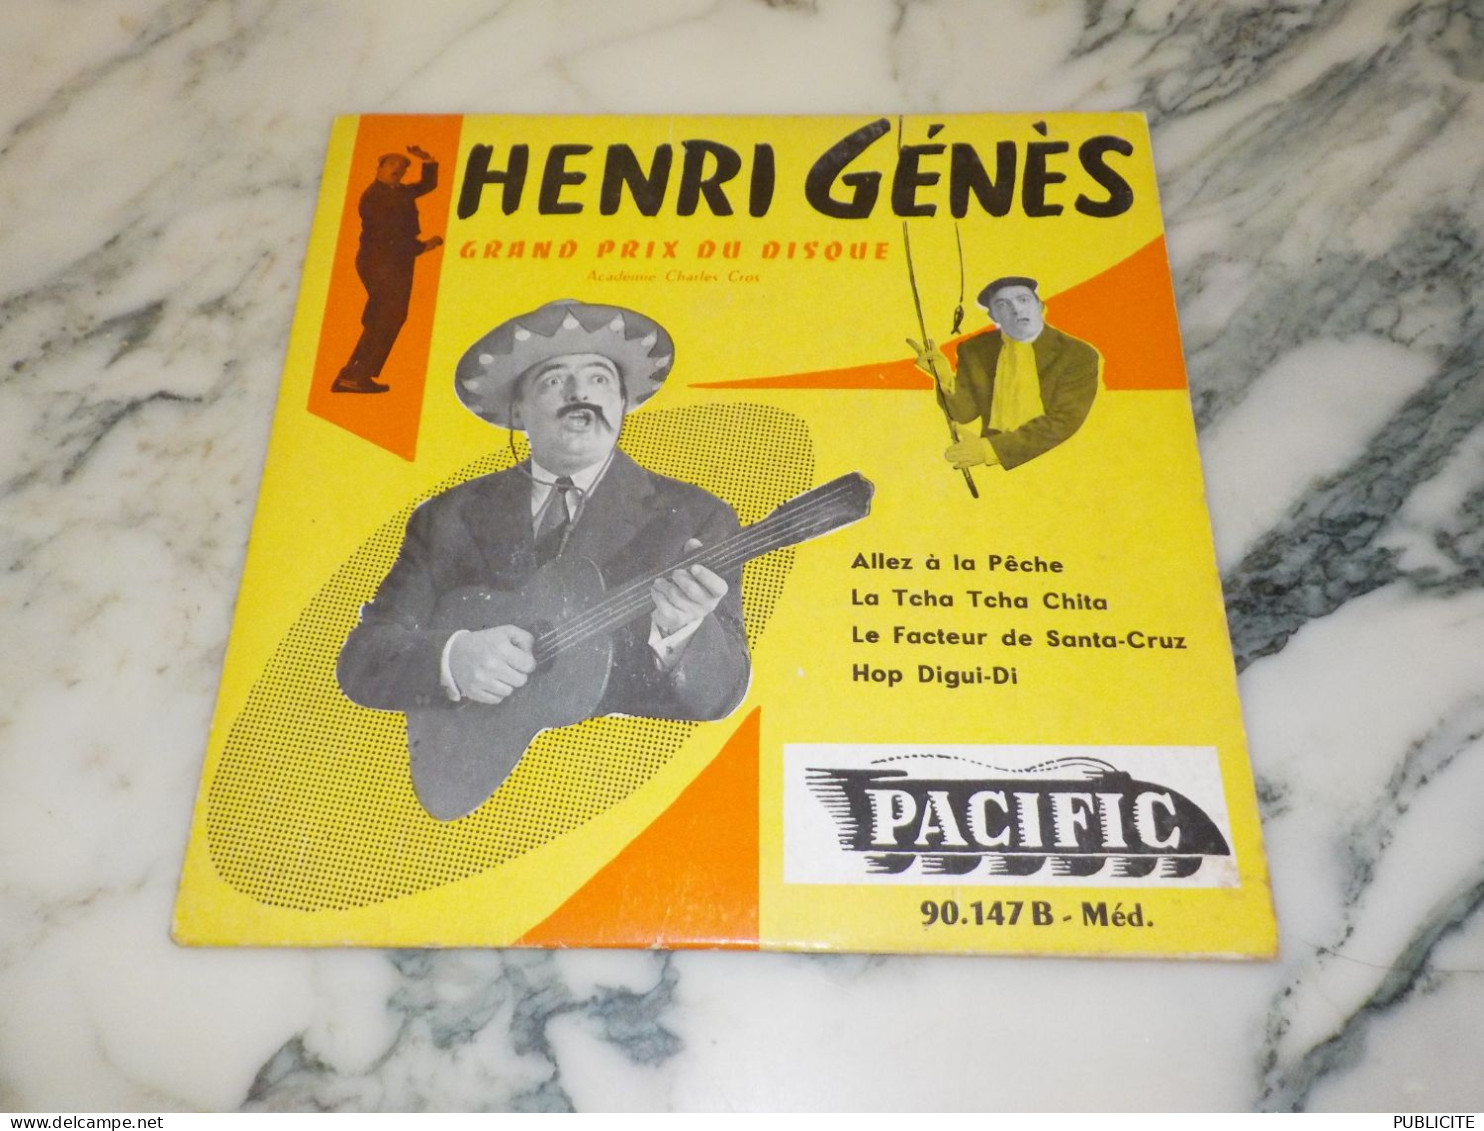 45 TOURS GRAND PRIX DU DISQUE HENRI GENES 1955 - Humour, Cabaret